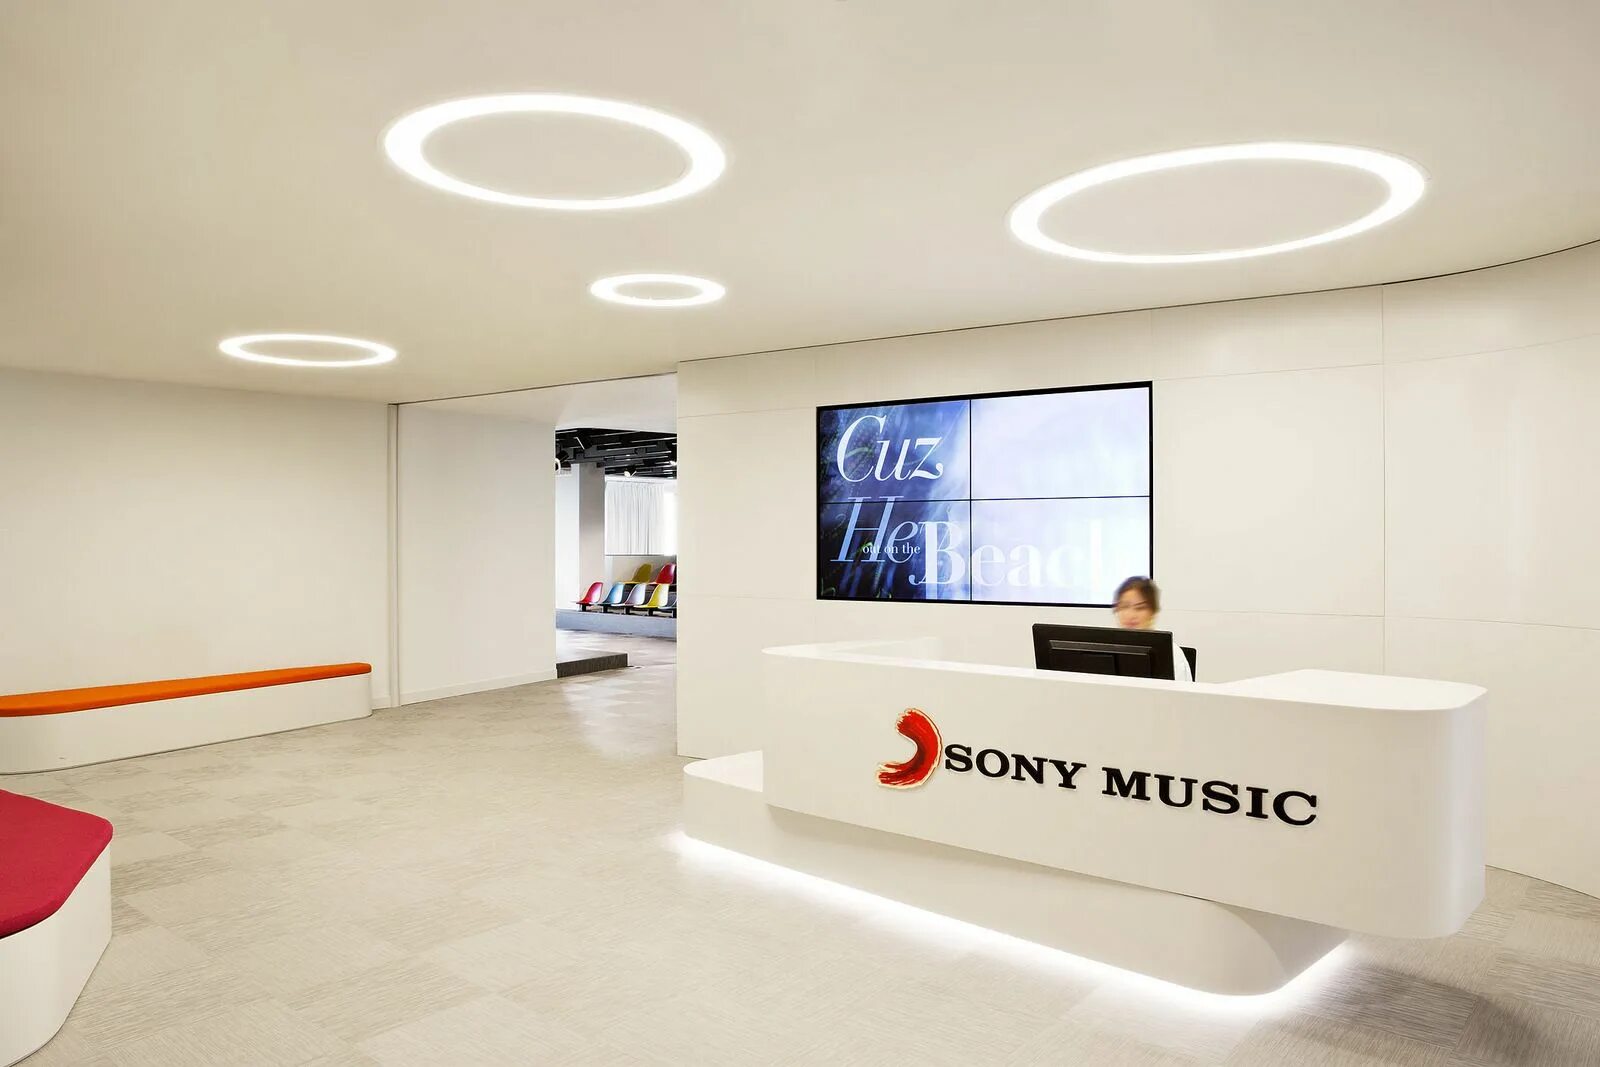 S one music. Штаб-квартира Sony Corporation в Токио. Sony Office. Сони Мьюзик. Офис компании сони.